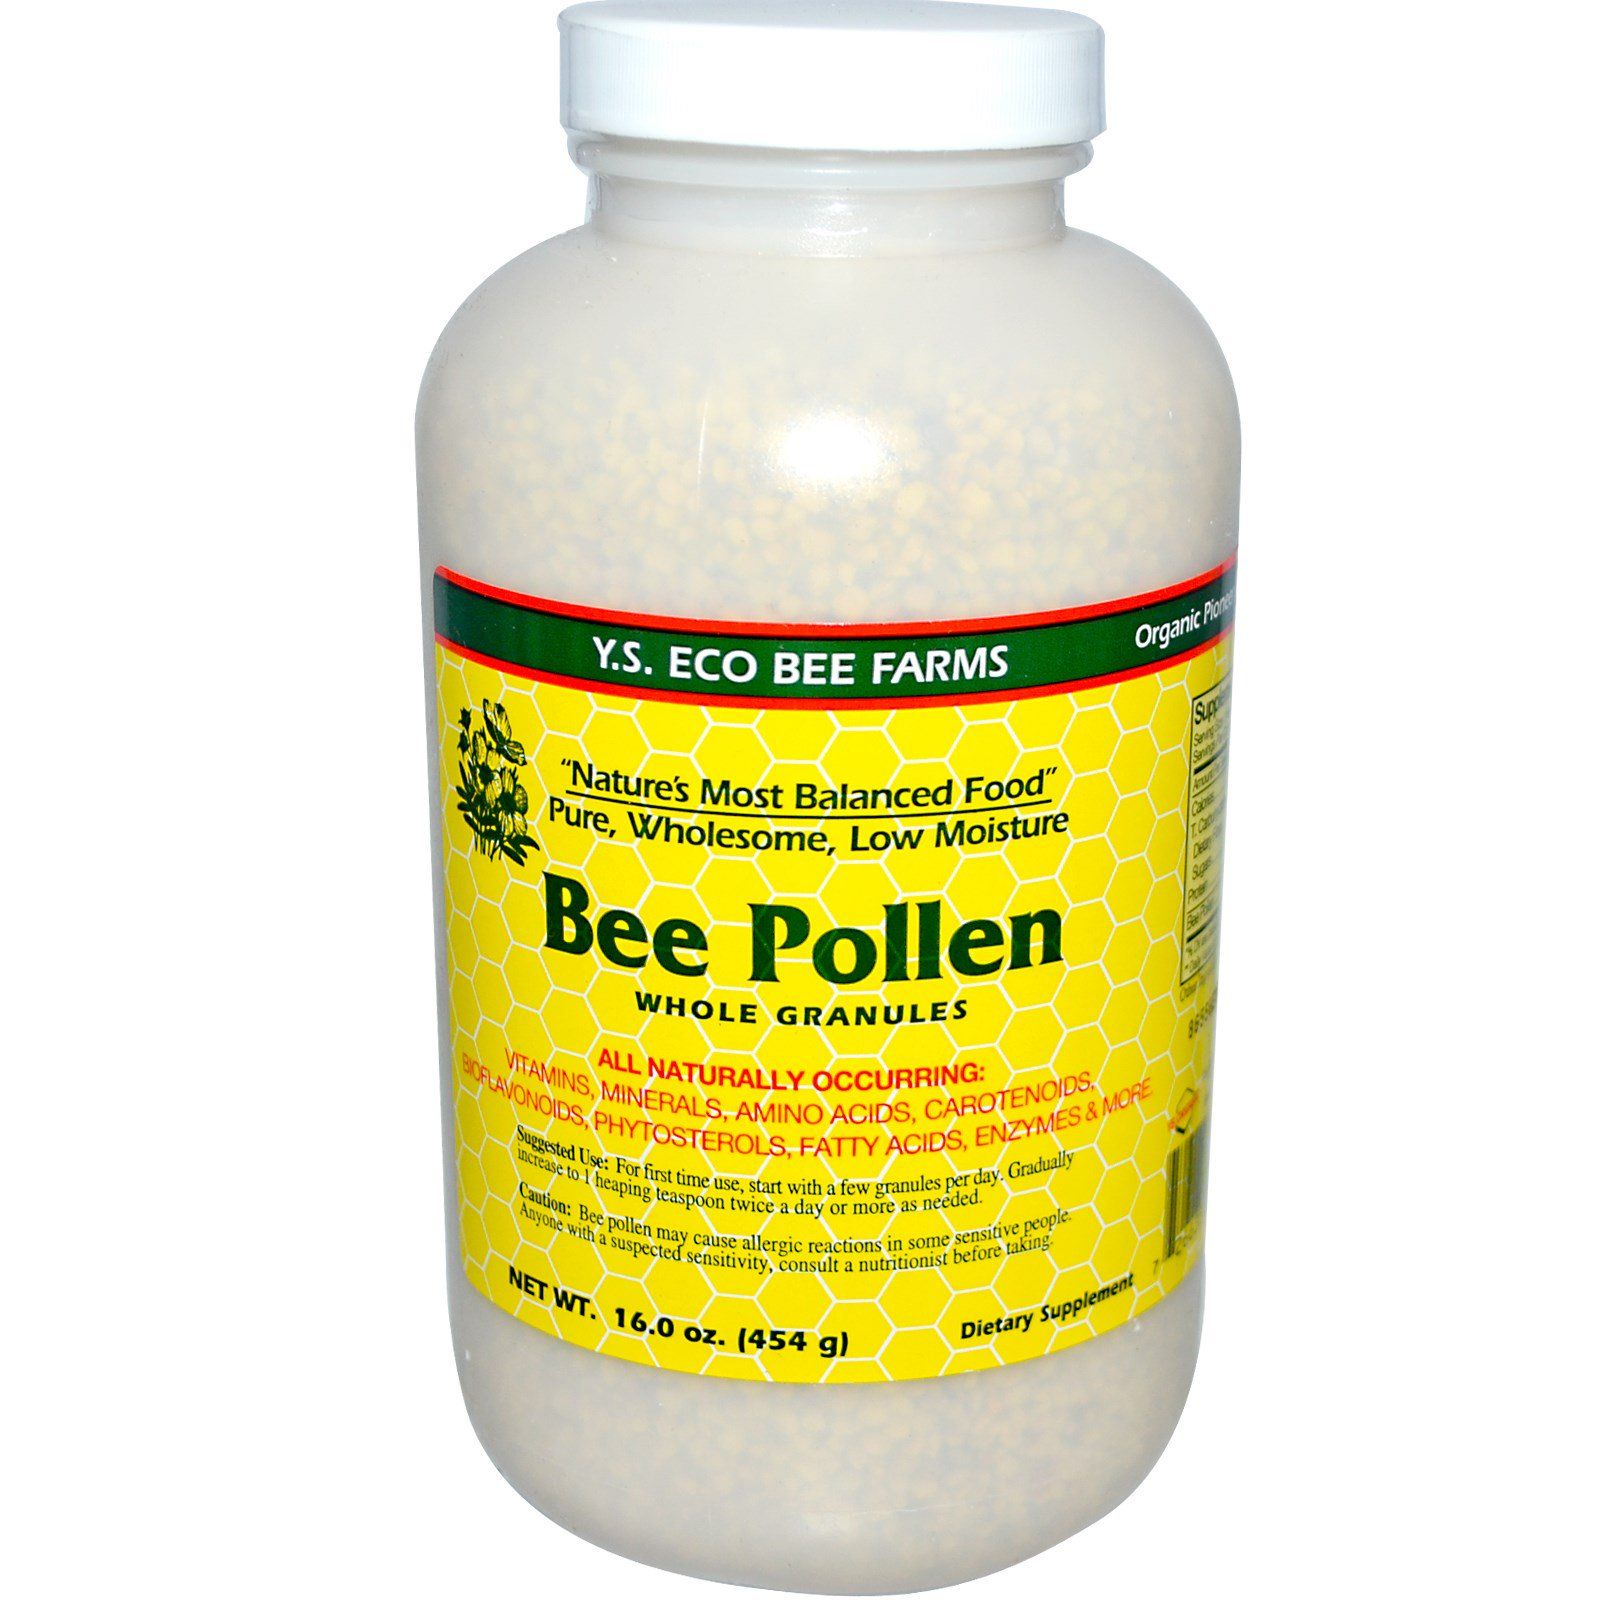 Y.S. Eco Bee Farms Пчелиная пыльца целые гранулы 16.0 унций (453 г)